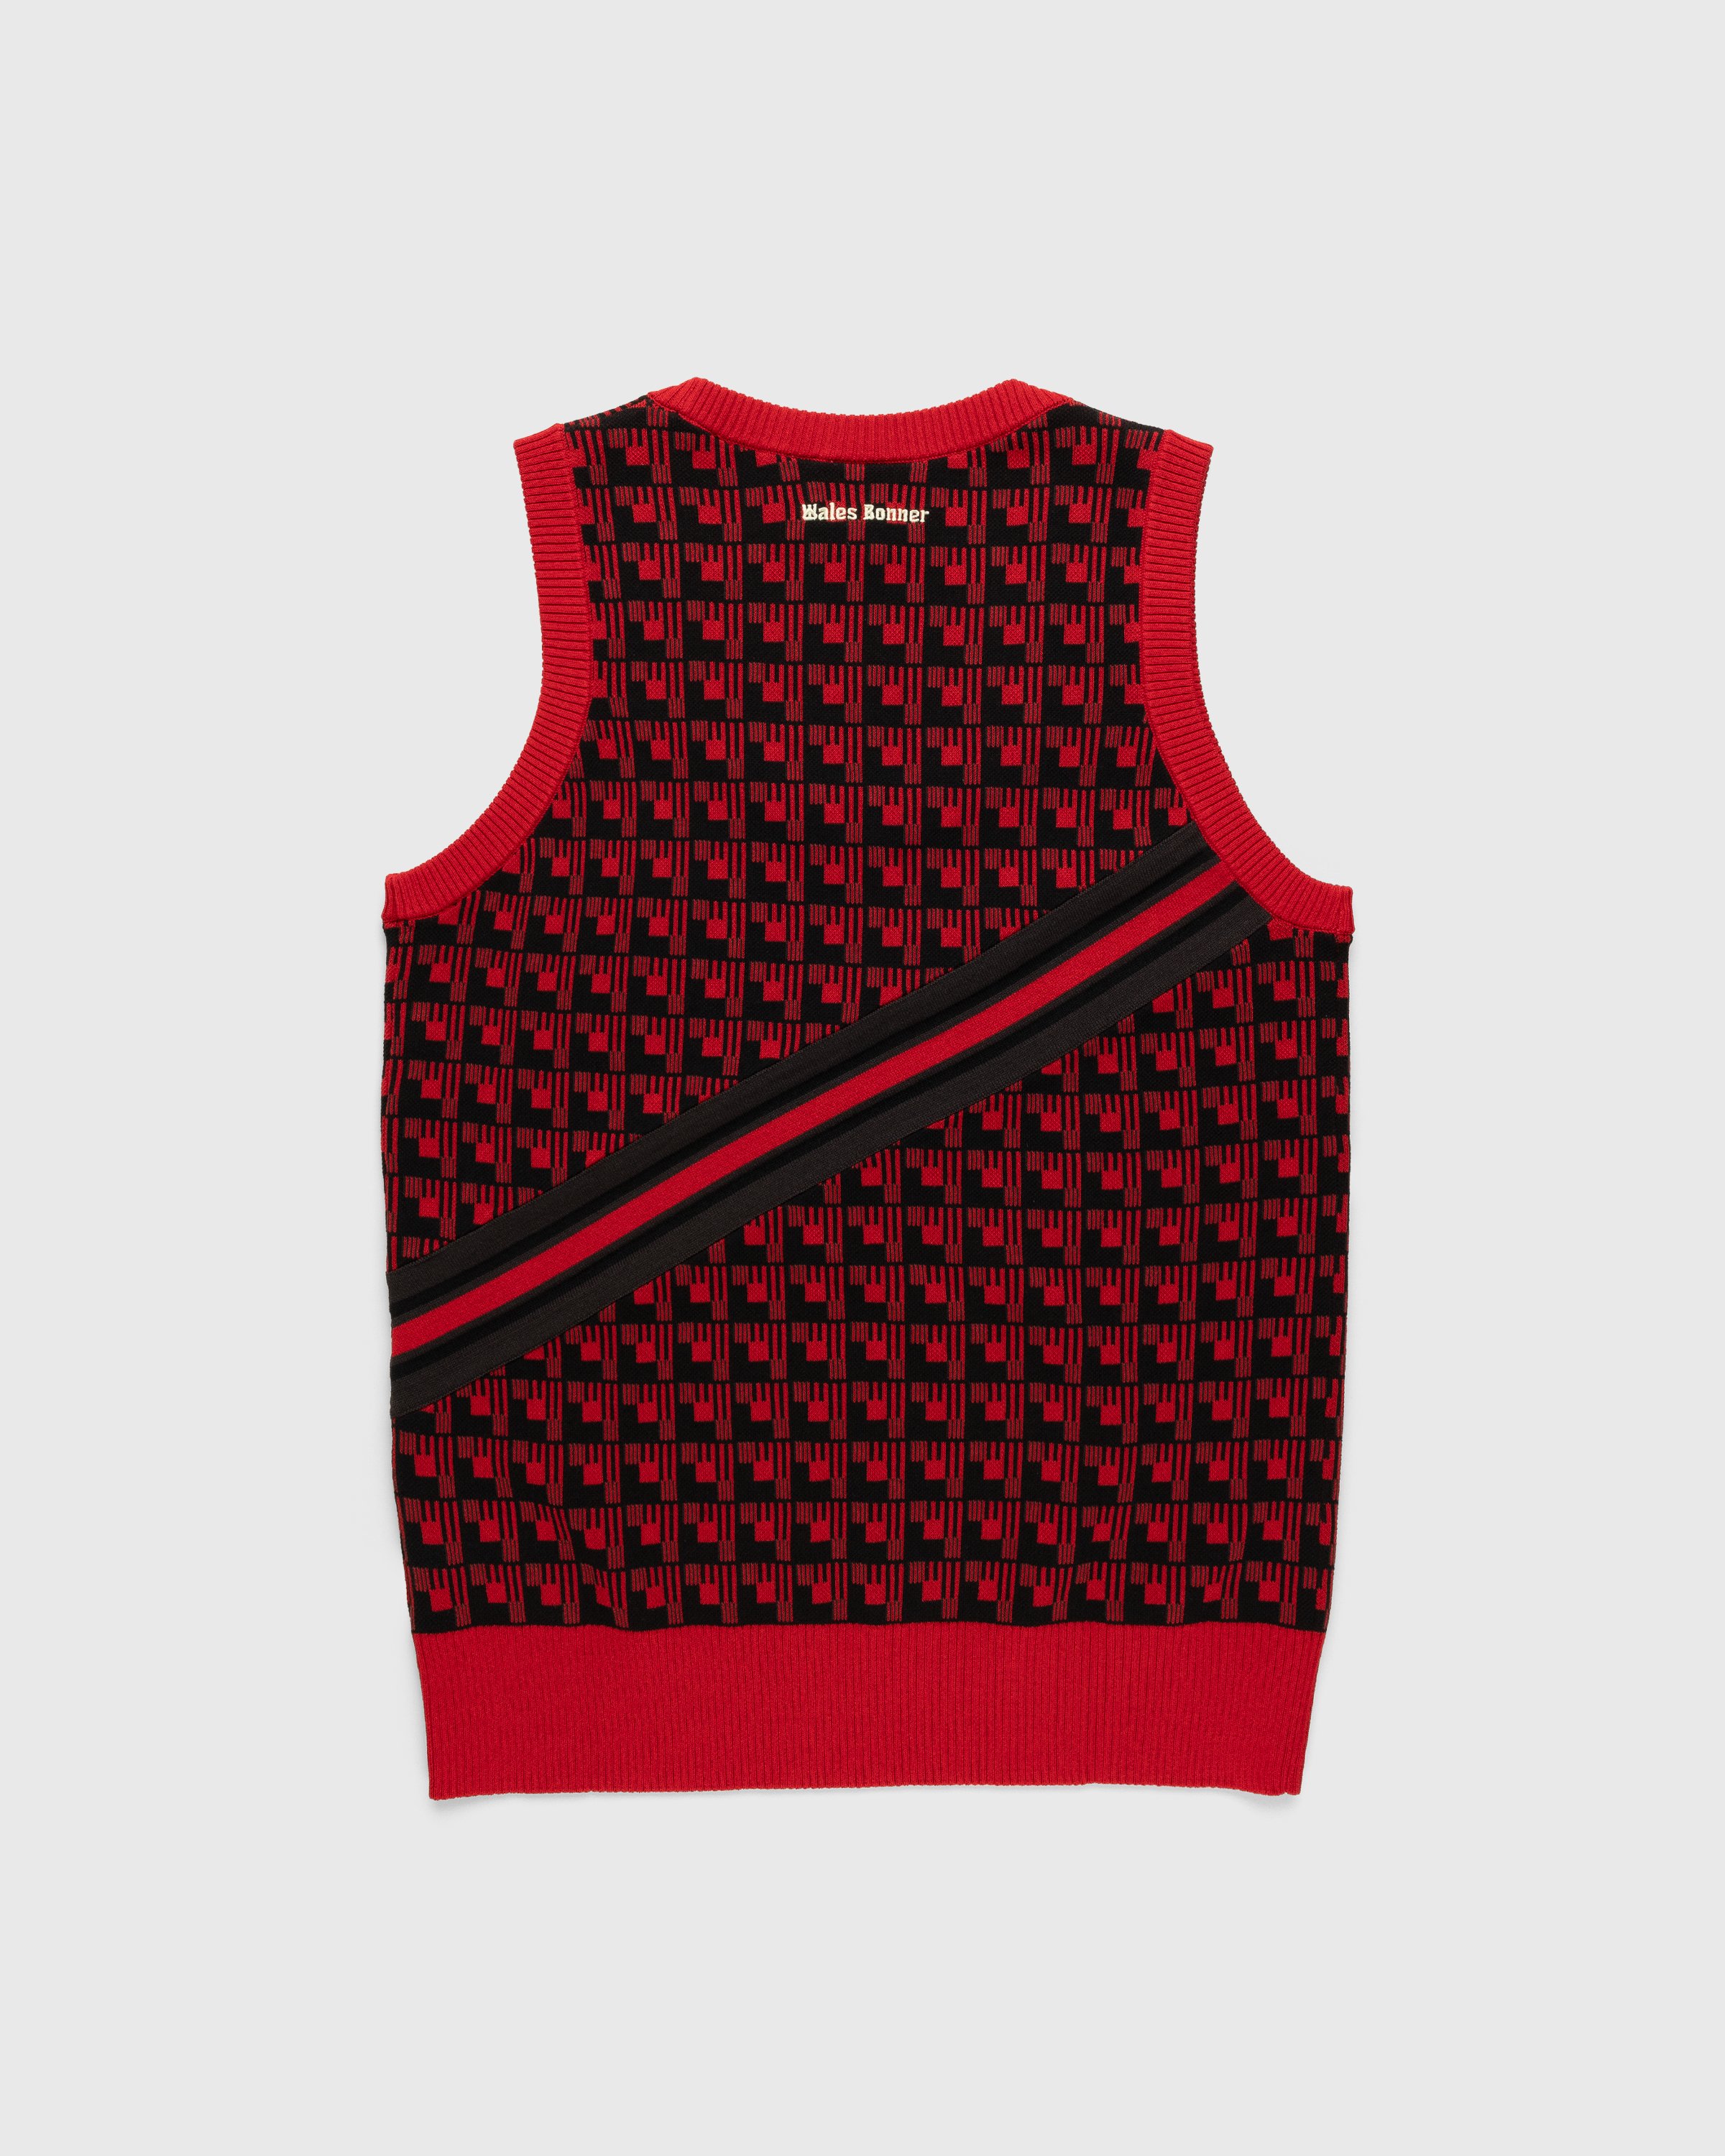 Adidas x Wales Bonner - WB Knit Vest Scarlet/Black - Clothing - Red - Image 2